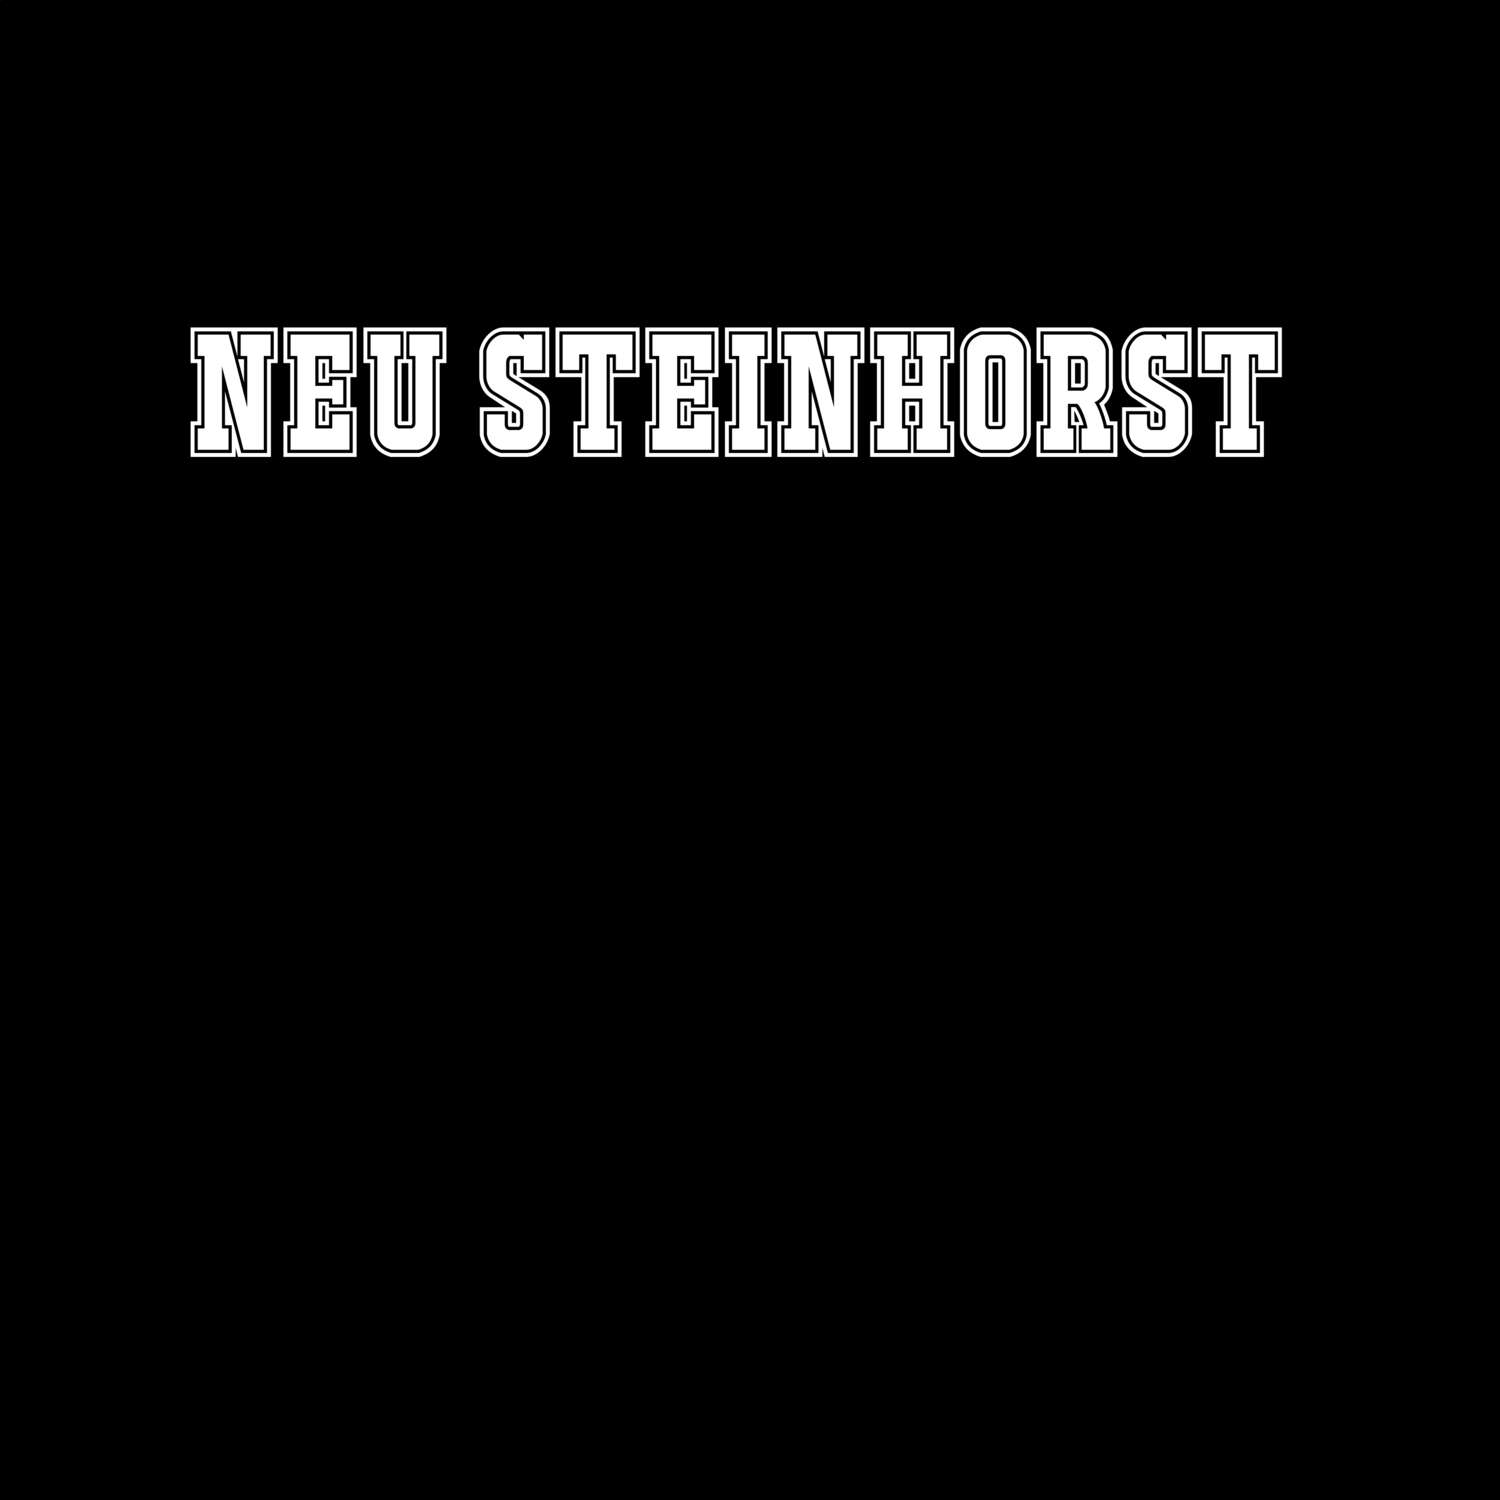 Neu Steinhorst T-Shirt »Classic«